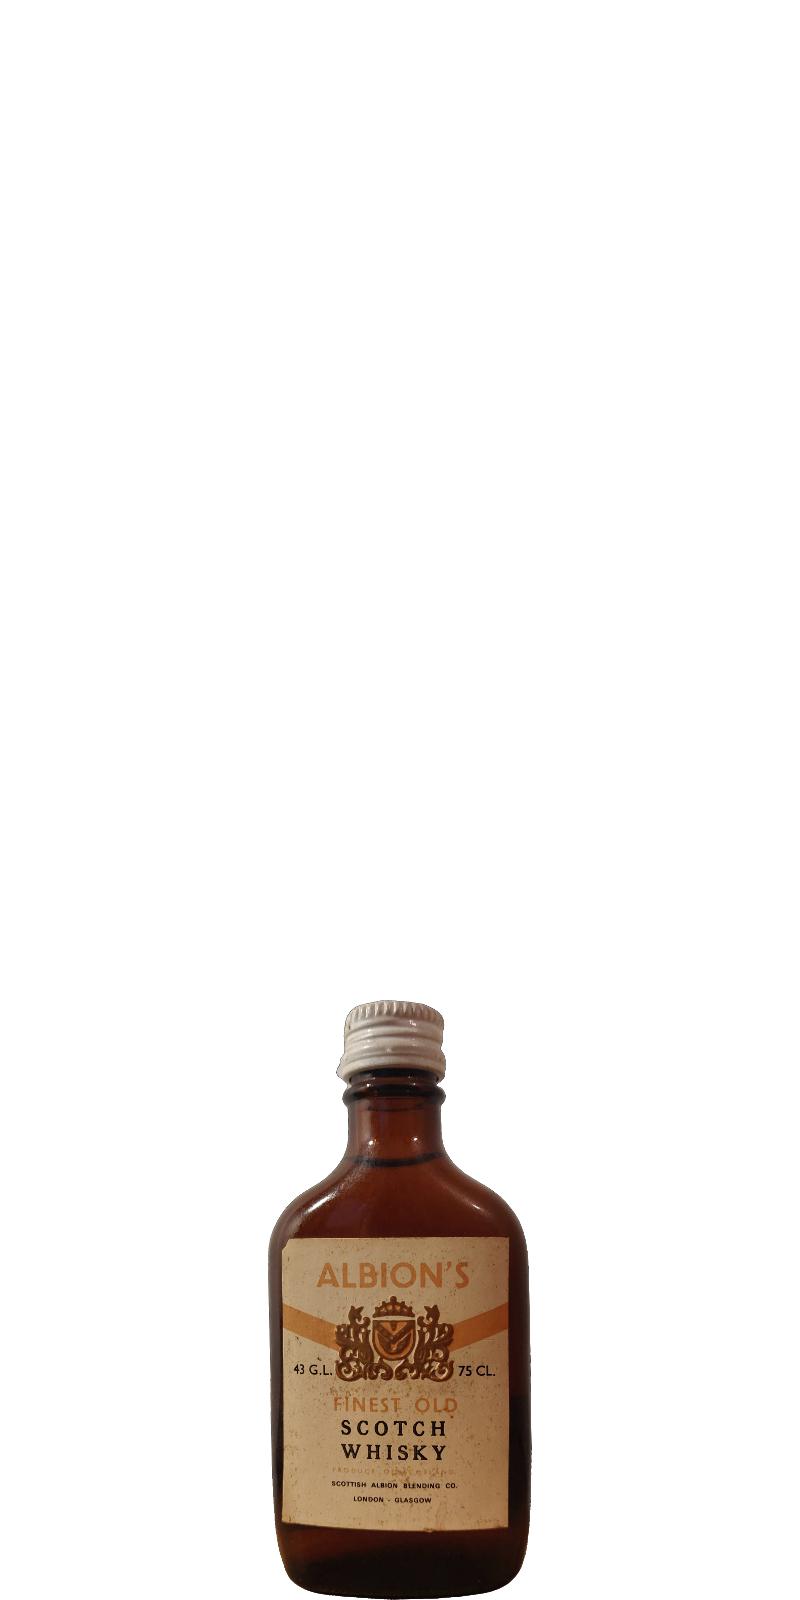 Albion's Finest Old Scotch Whisky